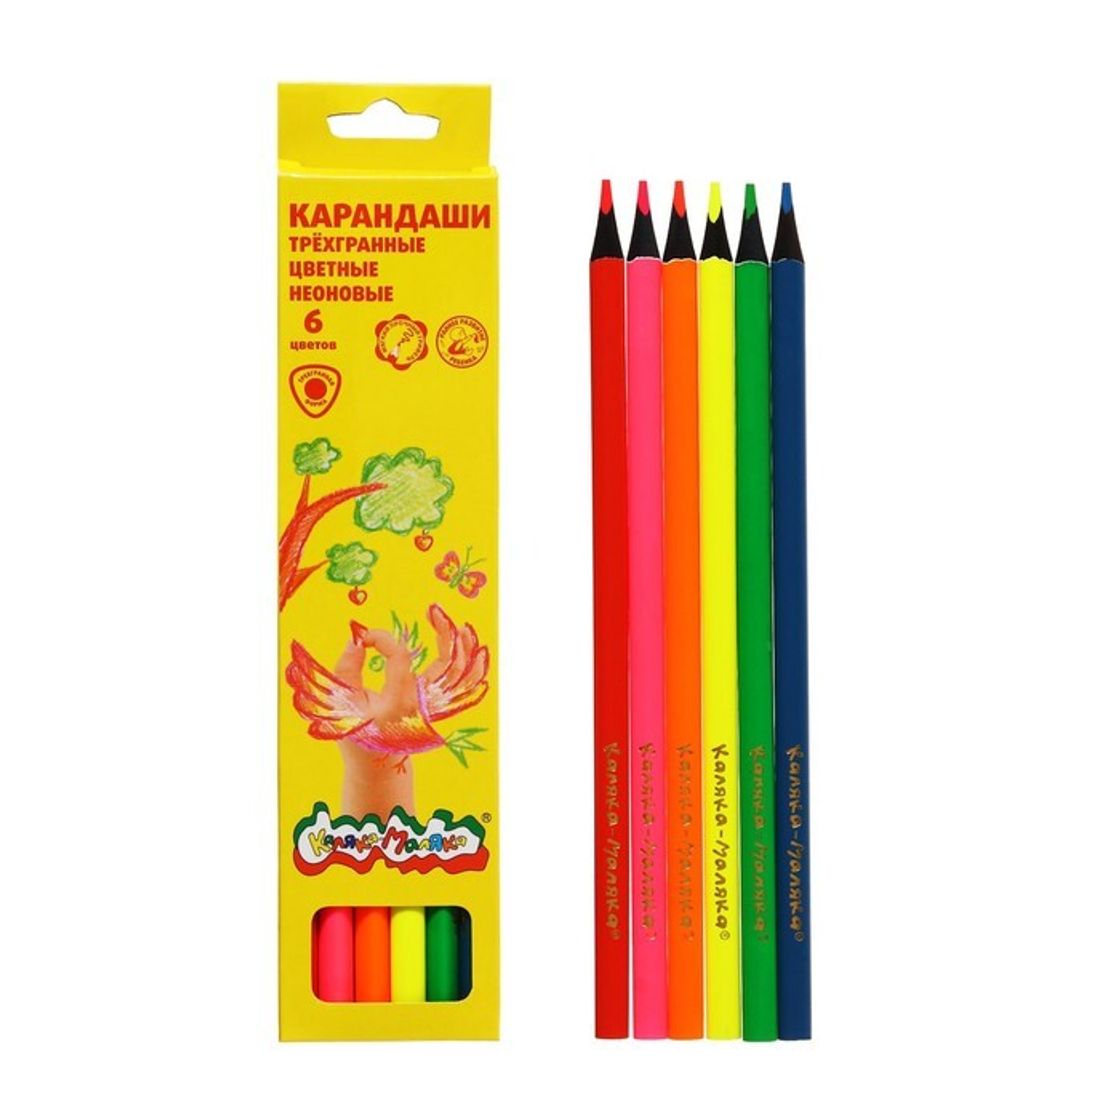 Неоновые карандаши. Цветные карандаши трехгранные 6 цветов. Карандаш неон. Неоновые карандаши для рисования. Клипарт Неоновые карандаши.